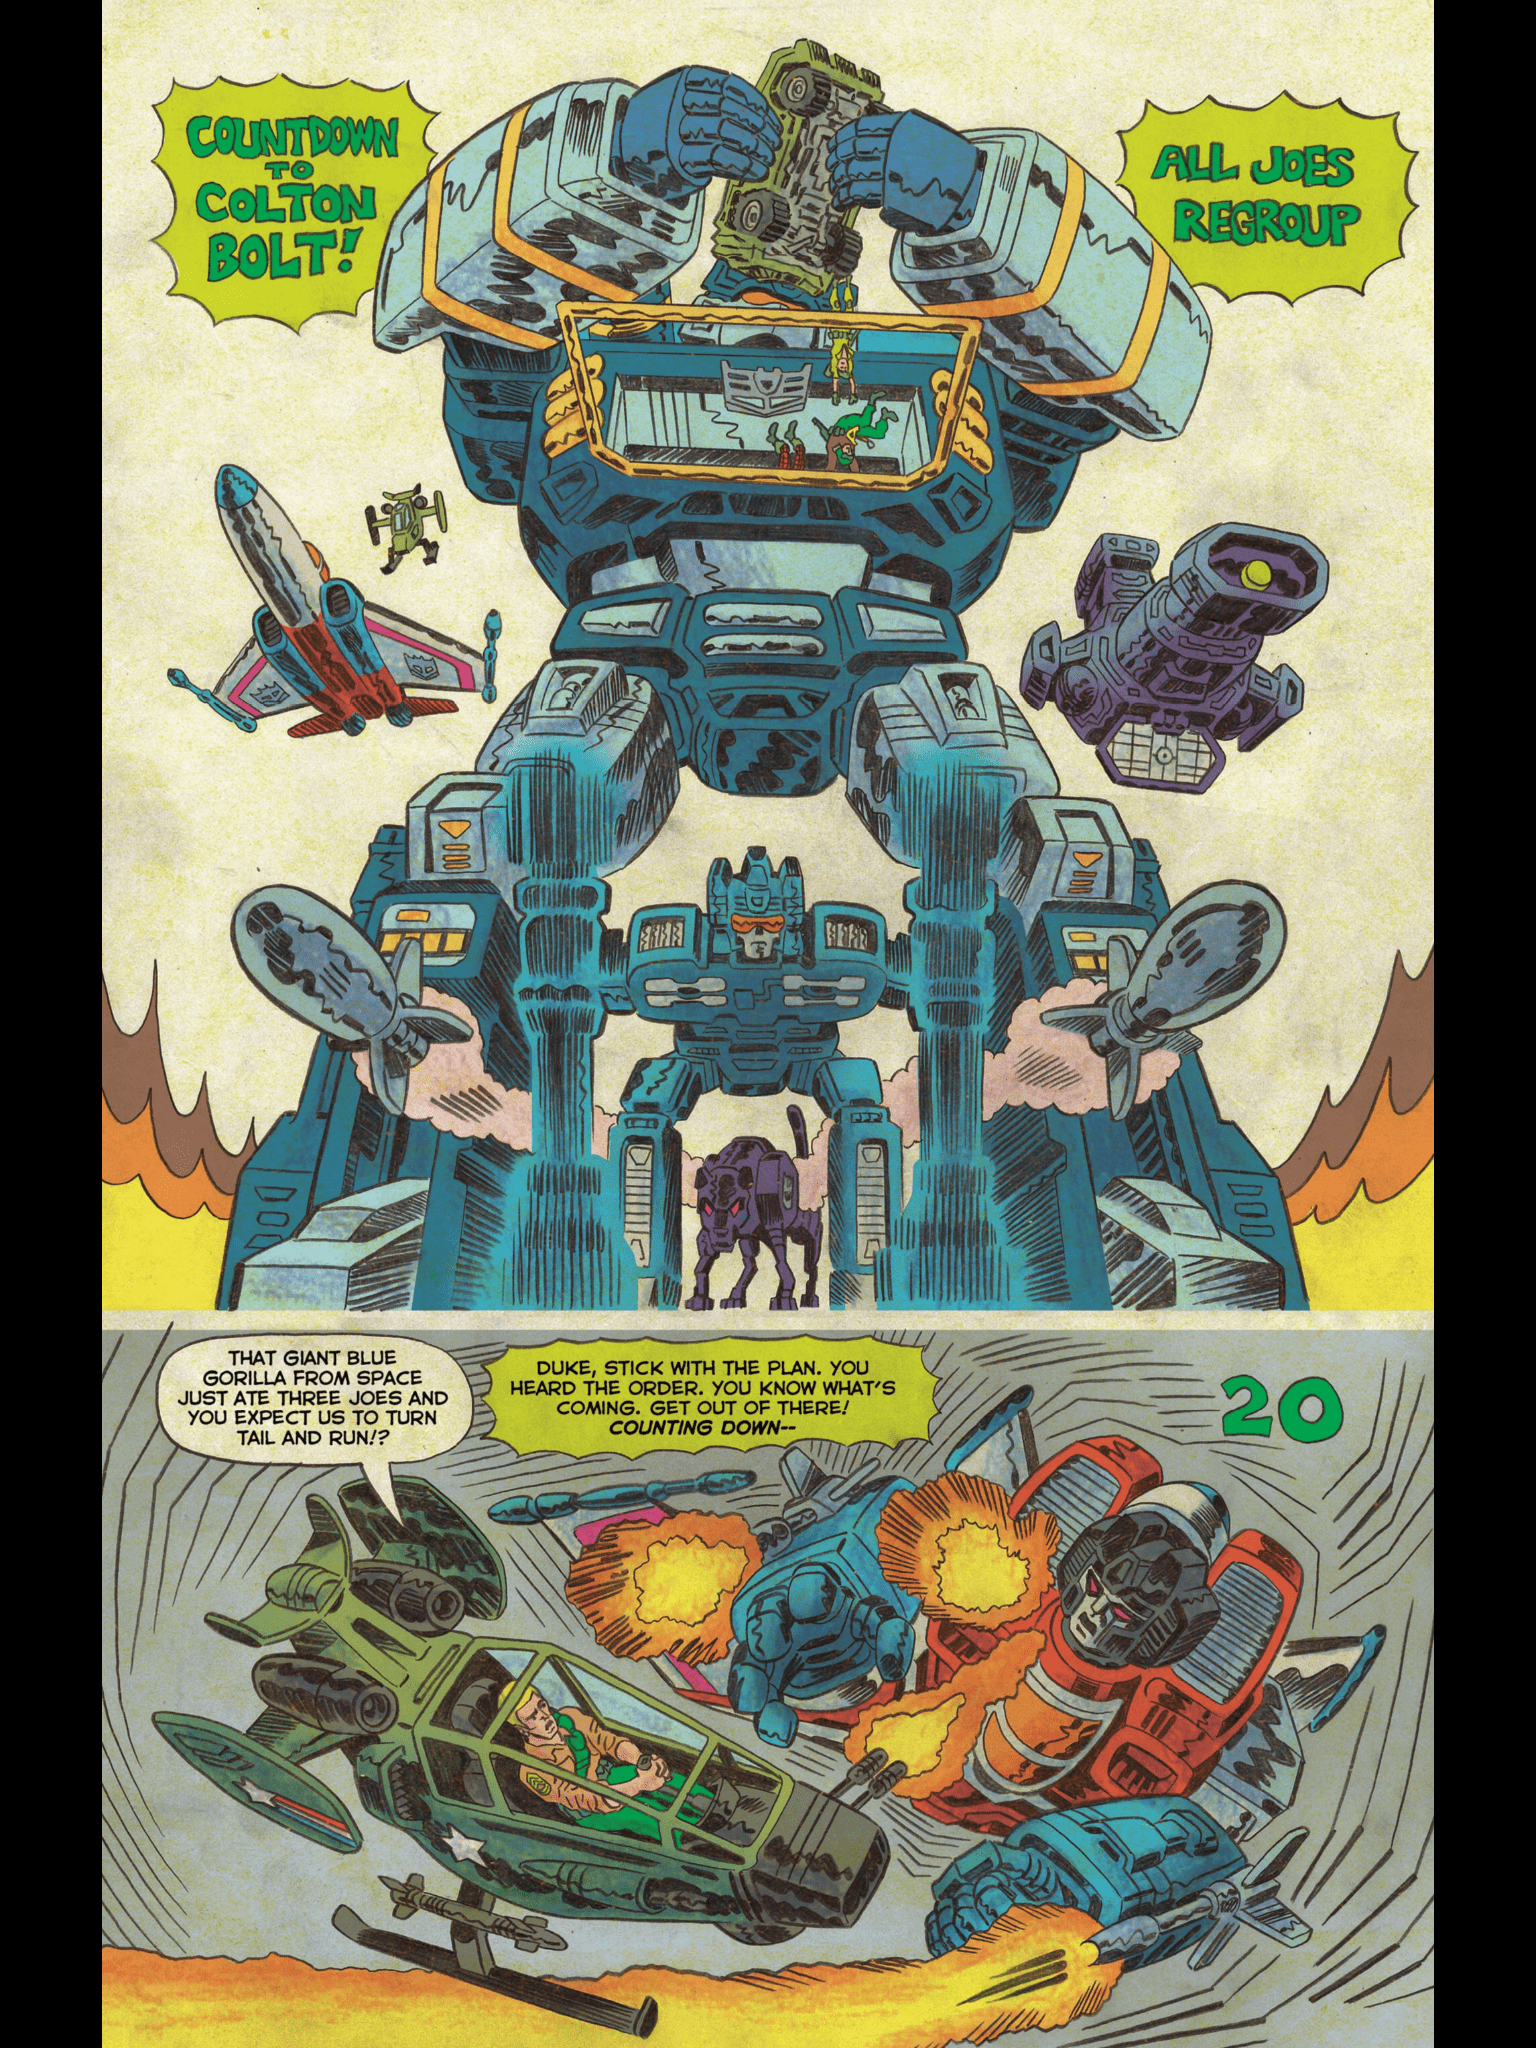 A Transformers Vs G.I. Joe Comic That’s Fun And… Smart!